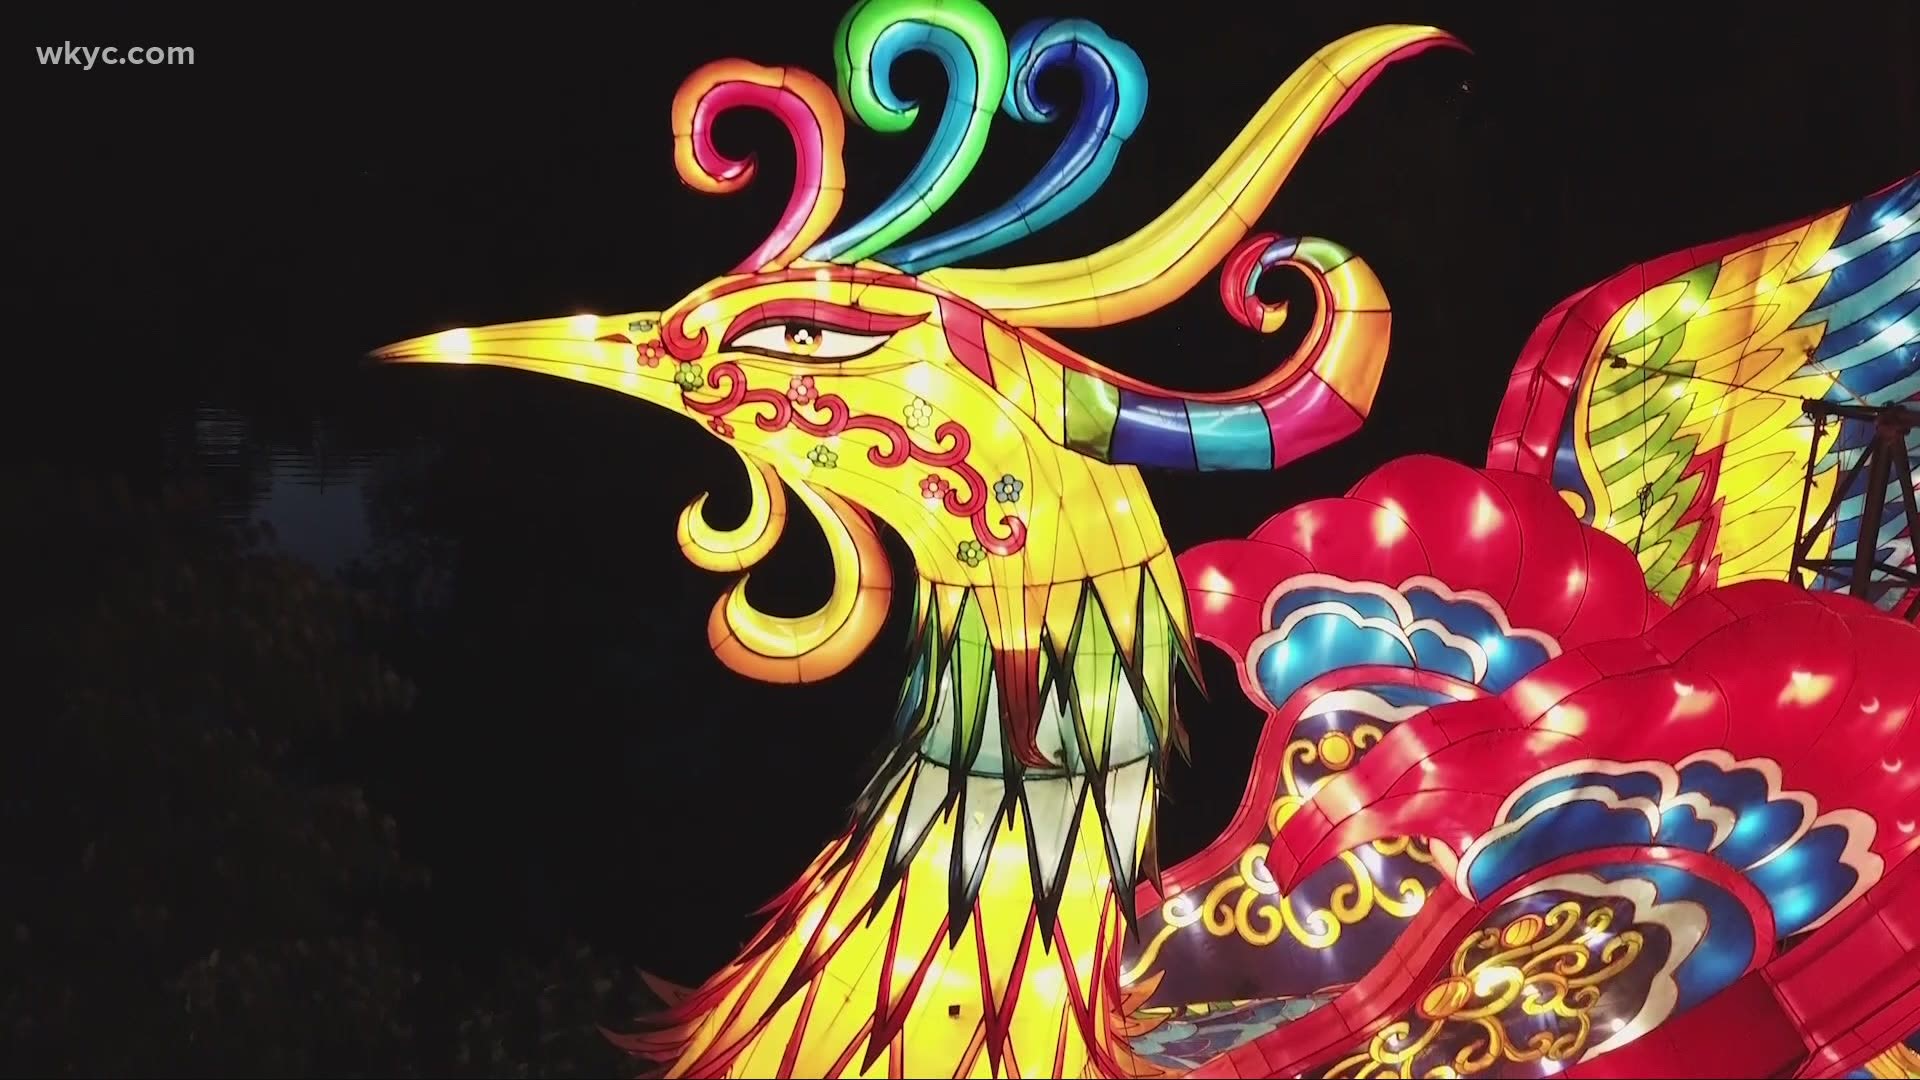 cleveland zoo lantern festival 2021